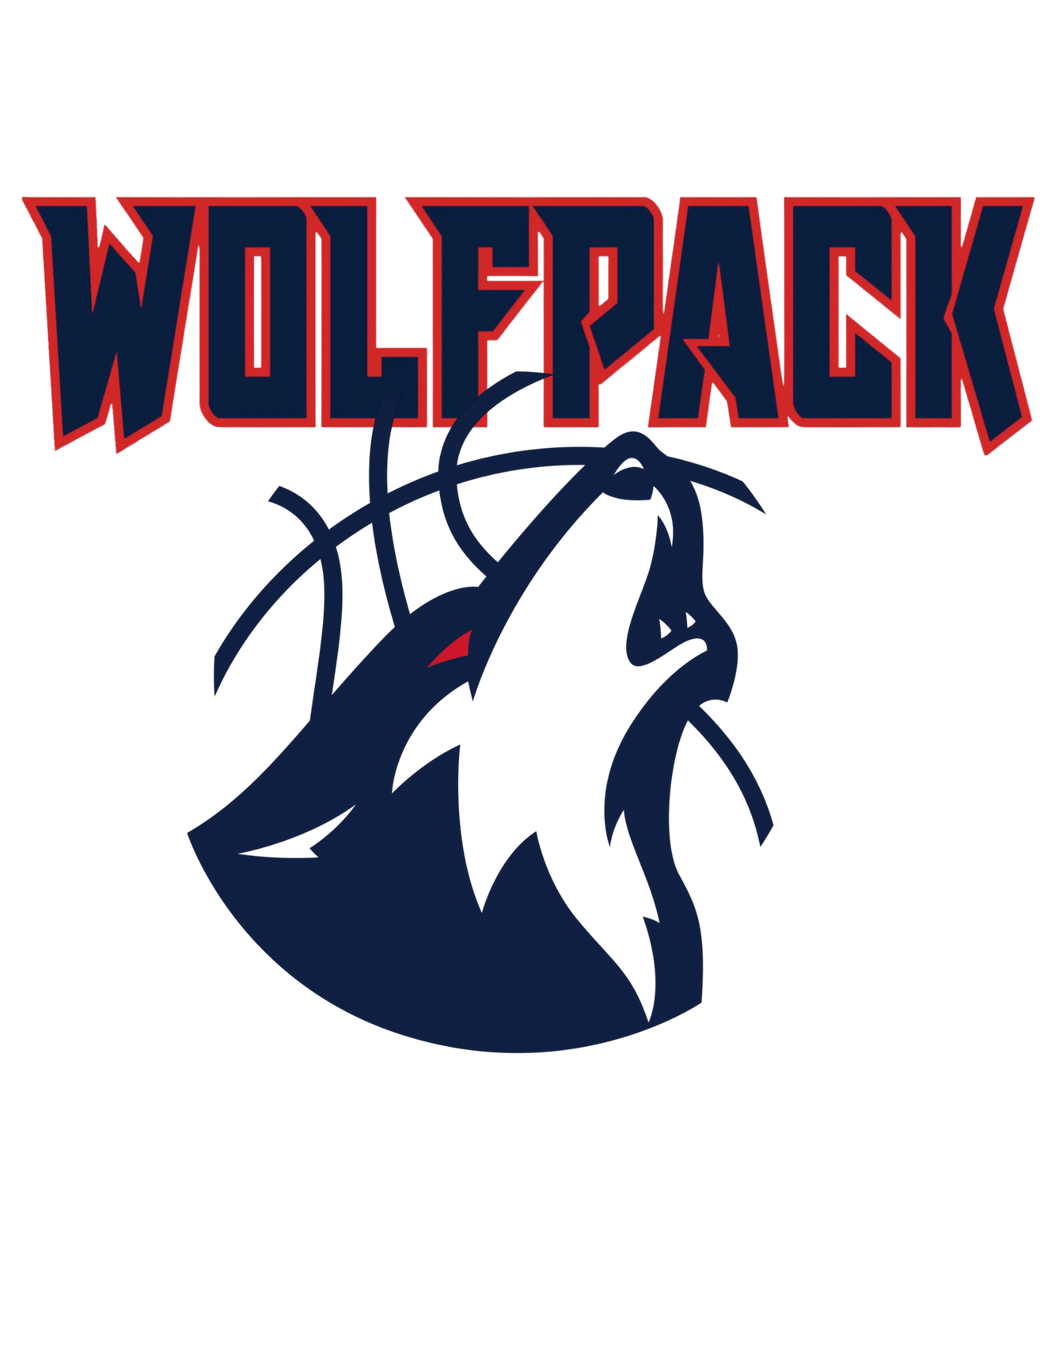 WolfPack T shirt